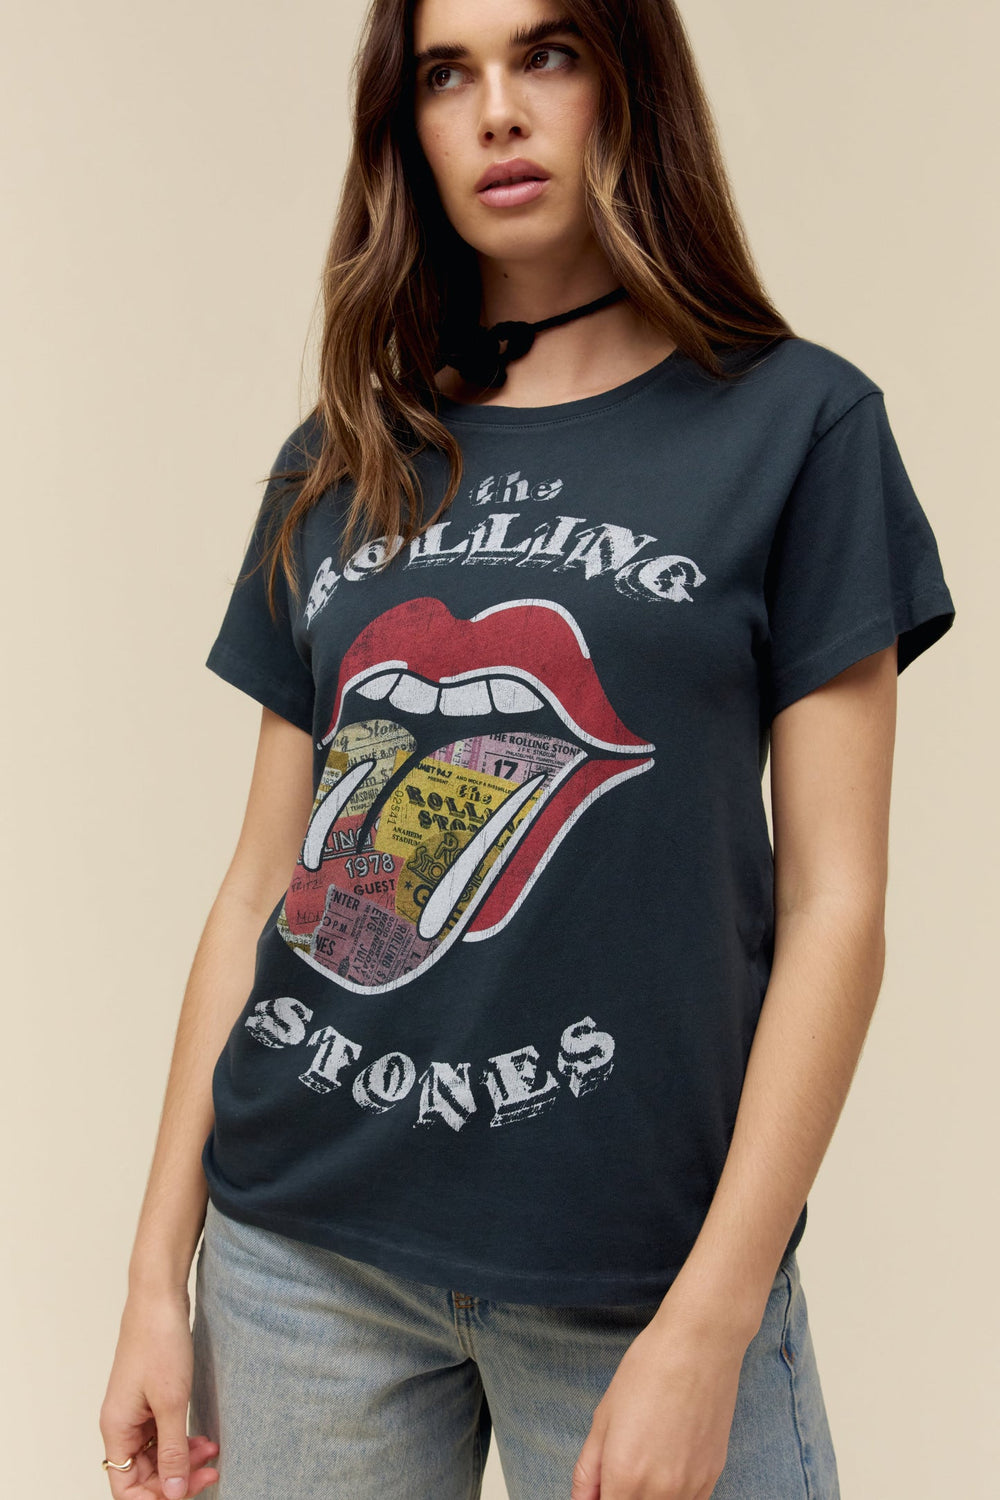 – T Graphic Stones Fill Ticket Tongue Tour Shirt Rolling Mint Market